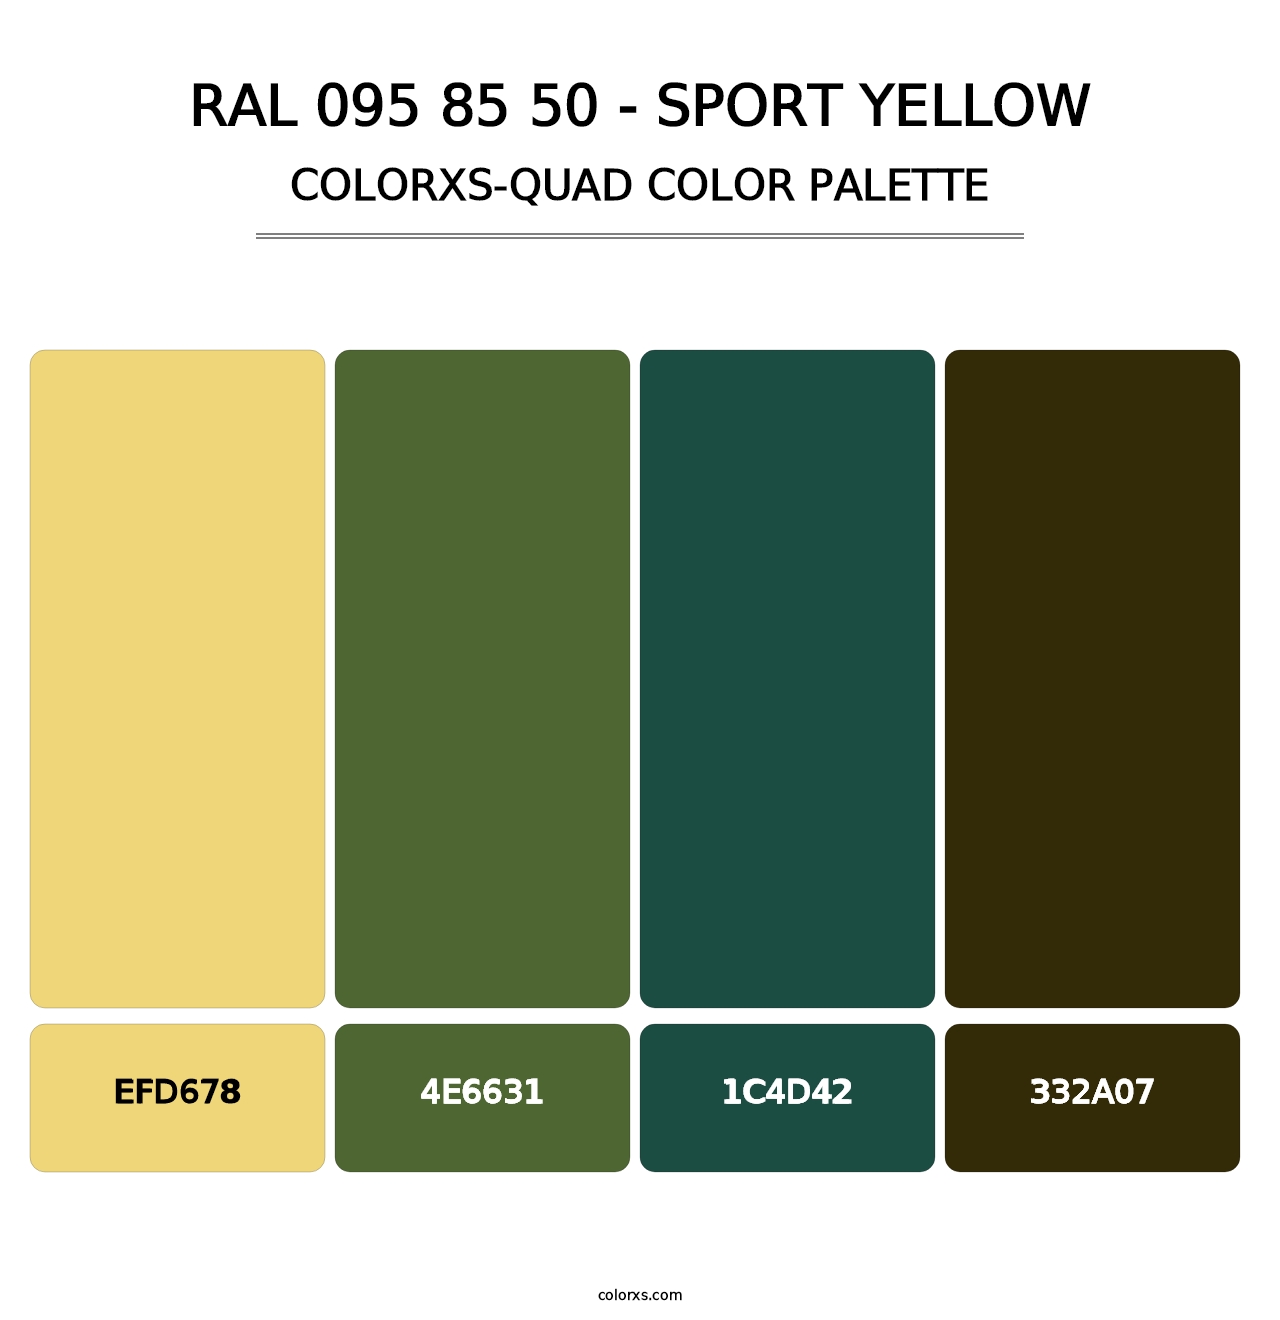 RAL 095 85 50 - Sport Yellow - Colorxs Quad Palette